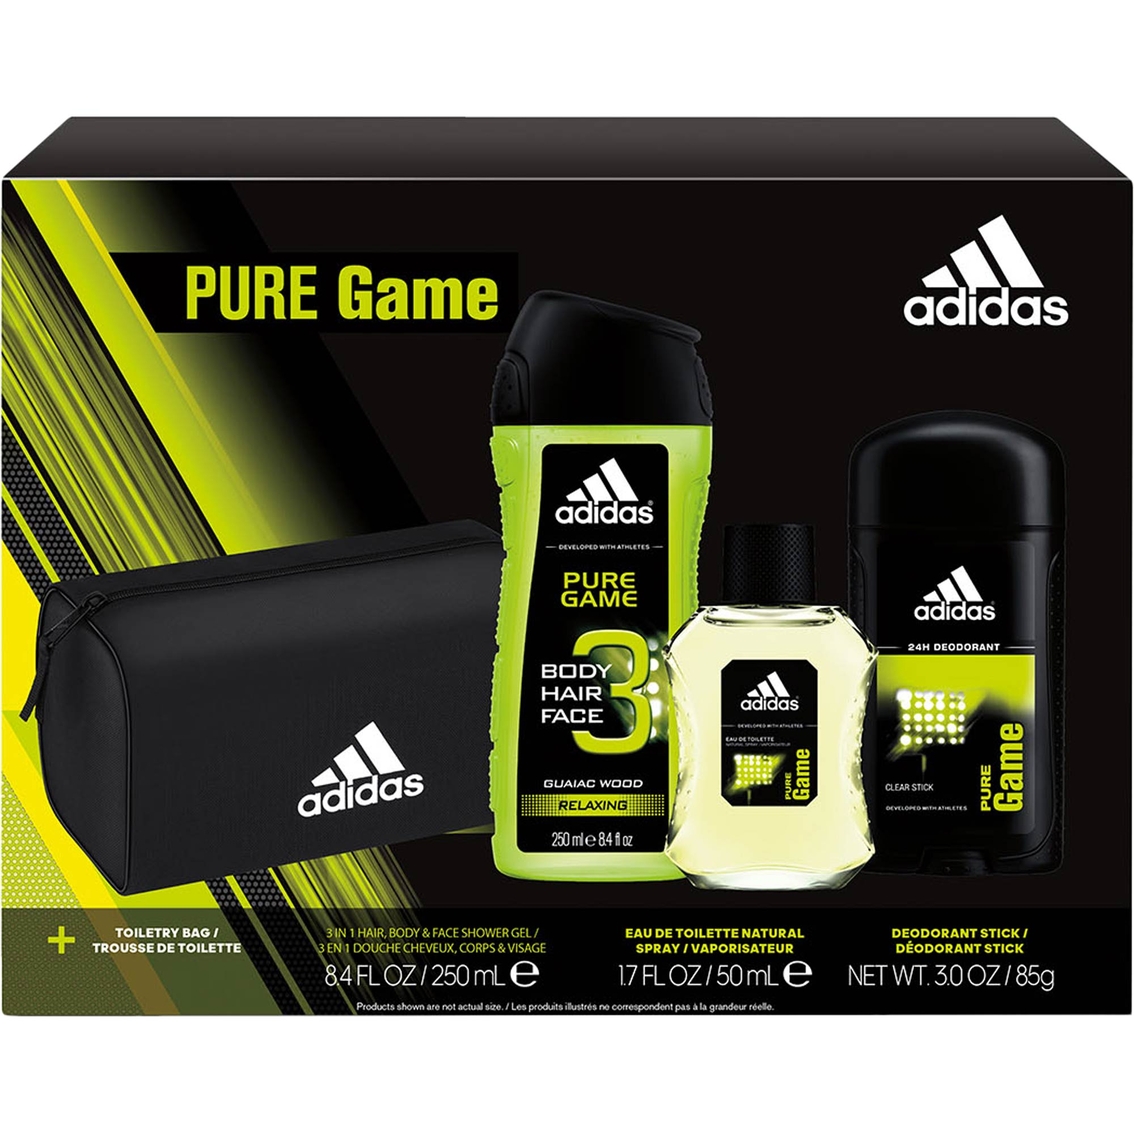 adidas pure game gift set